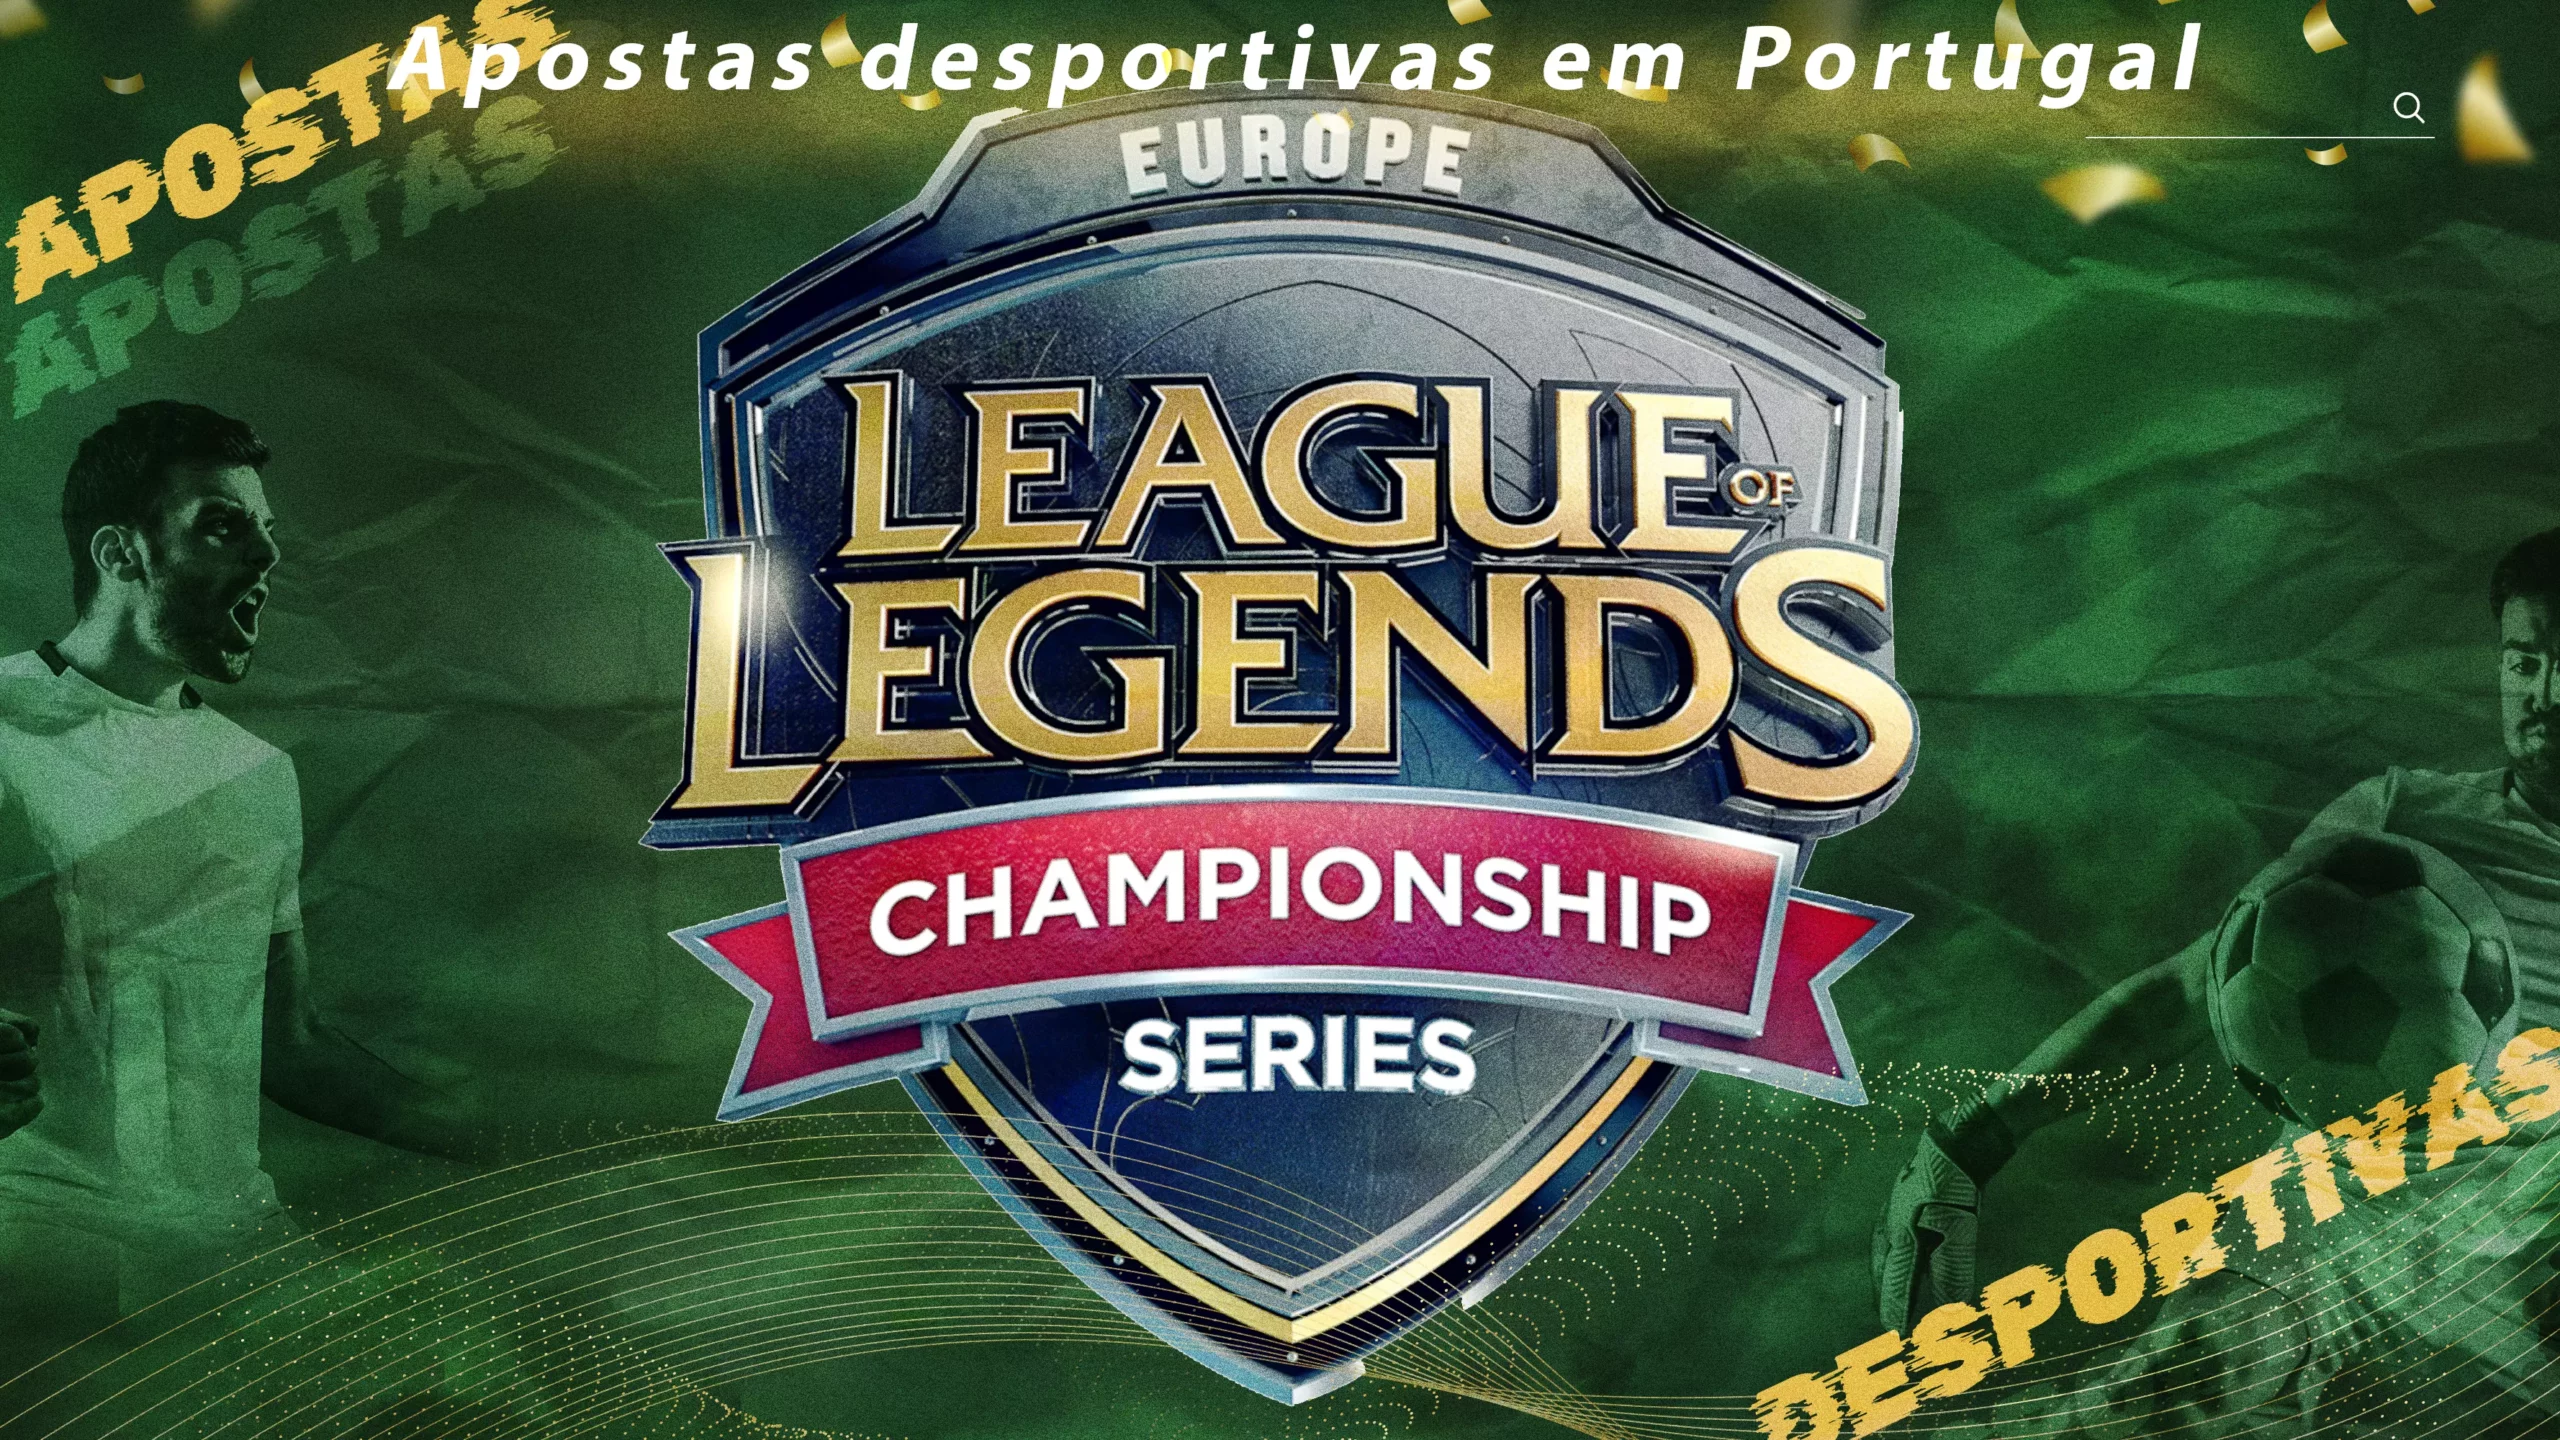 League of Legends - eSports